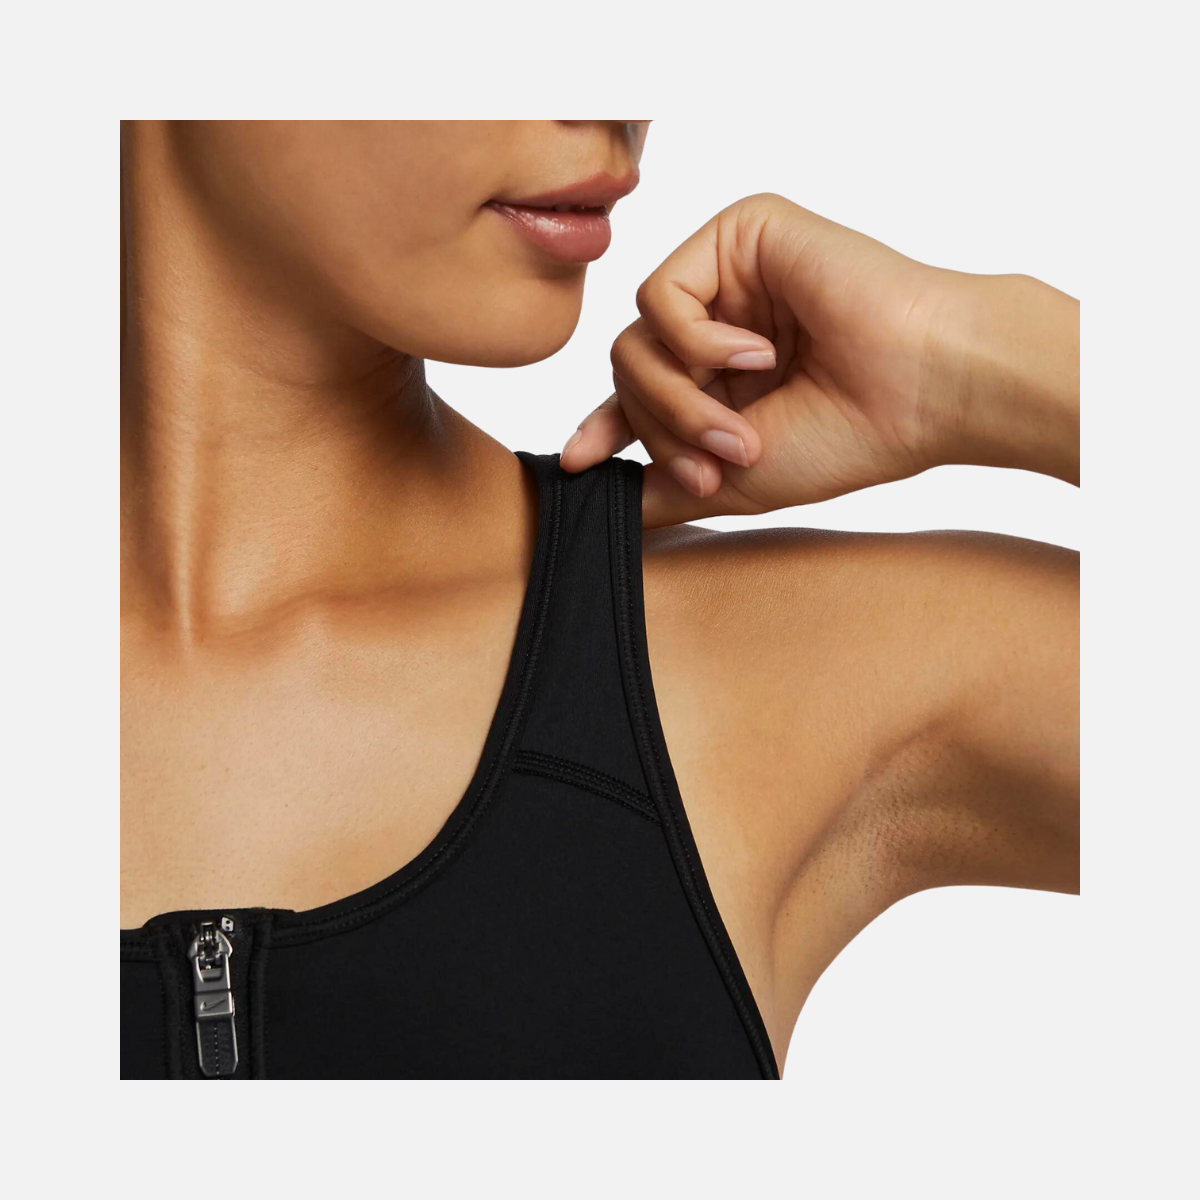 Nike Swoosh Women's Medium-Support Padded Zip-Front Sports Bra -Black/Black/White